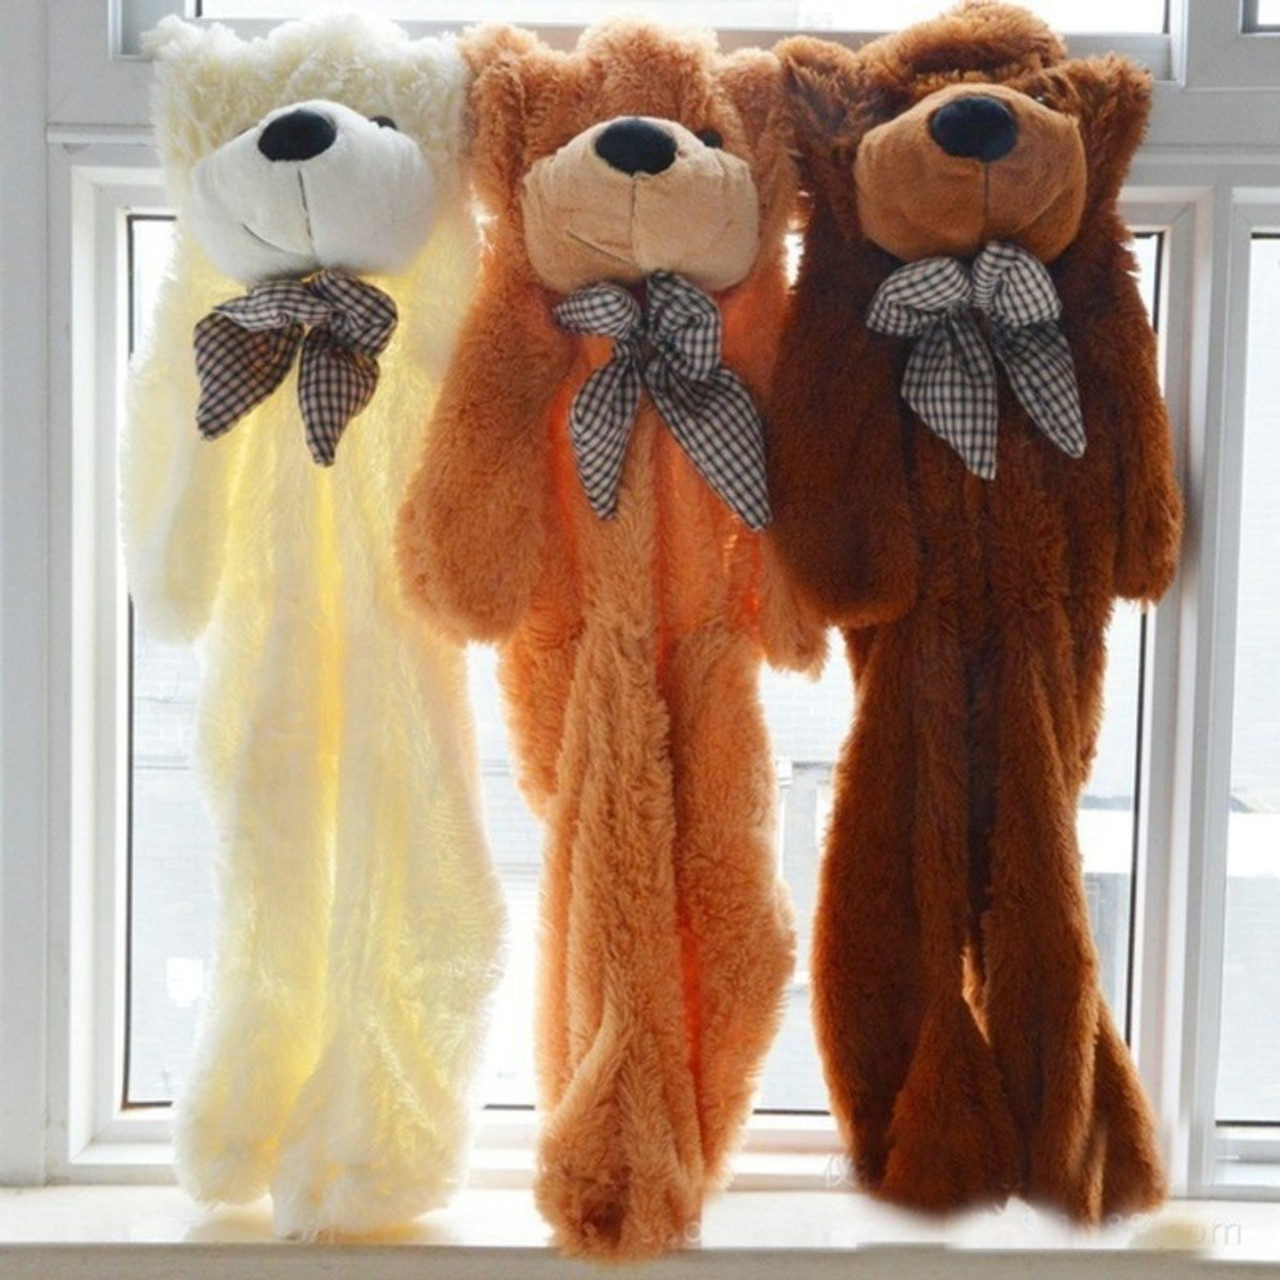 Ty Beanie Boos 6-Inch Slick Brown Fox Plush Beanie Baby Plush Stuffed Doll  Toy Collectible Soft Toys Big Eyes Plush Toys